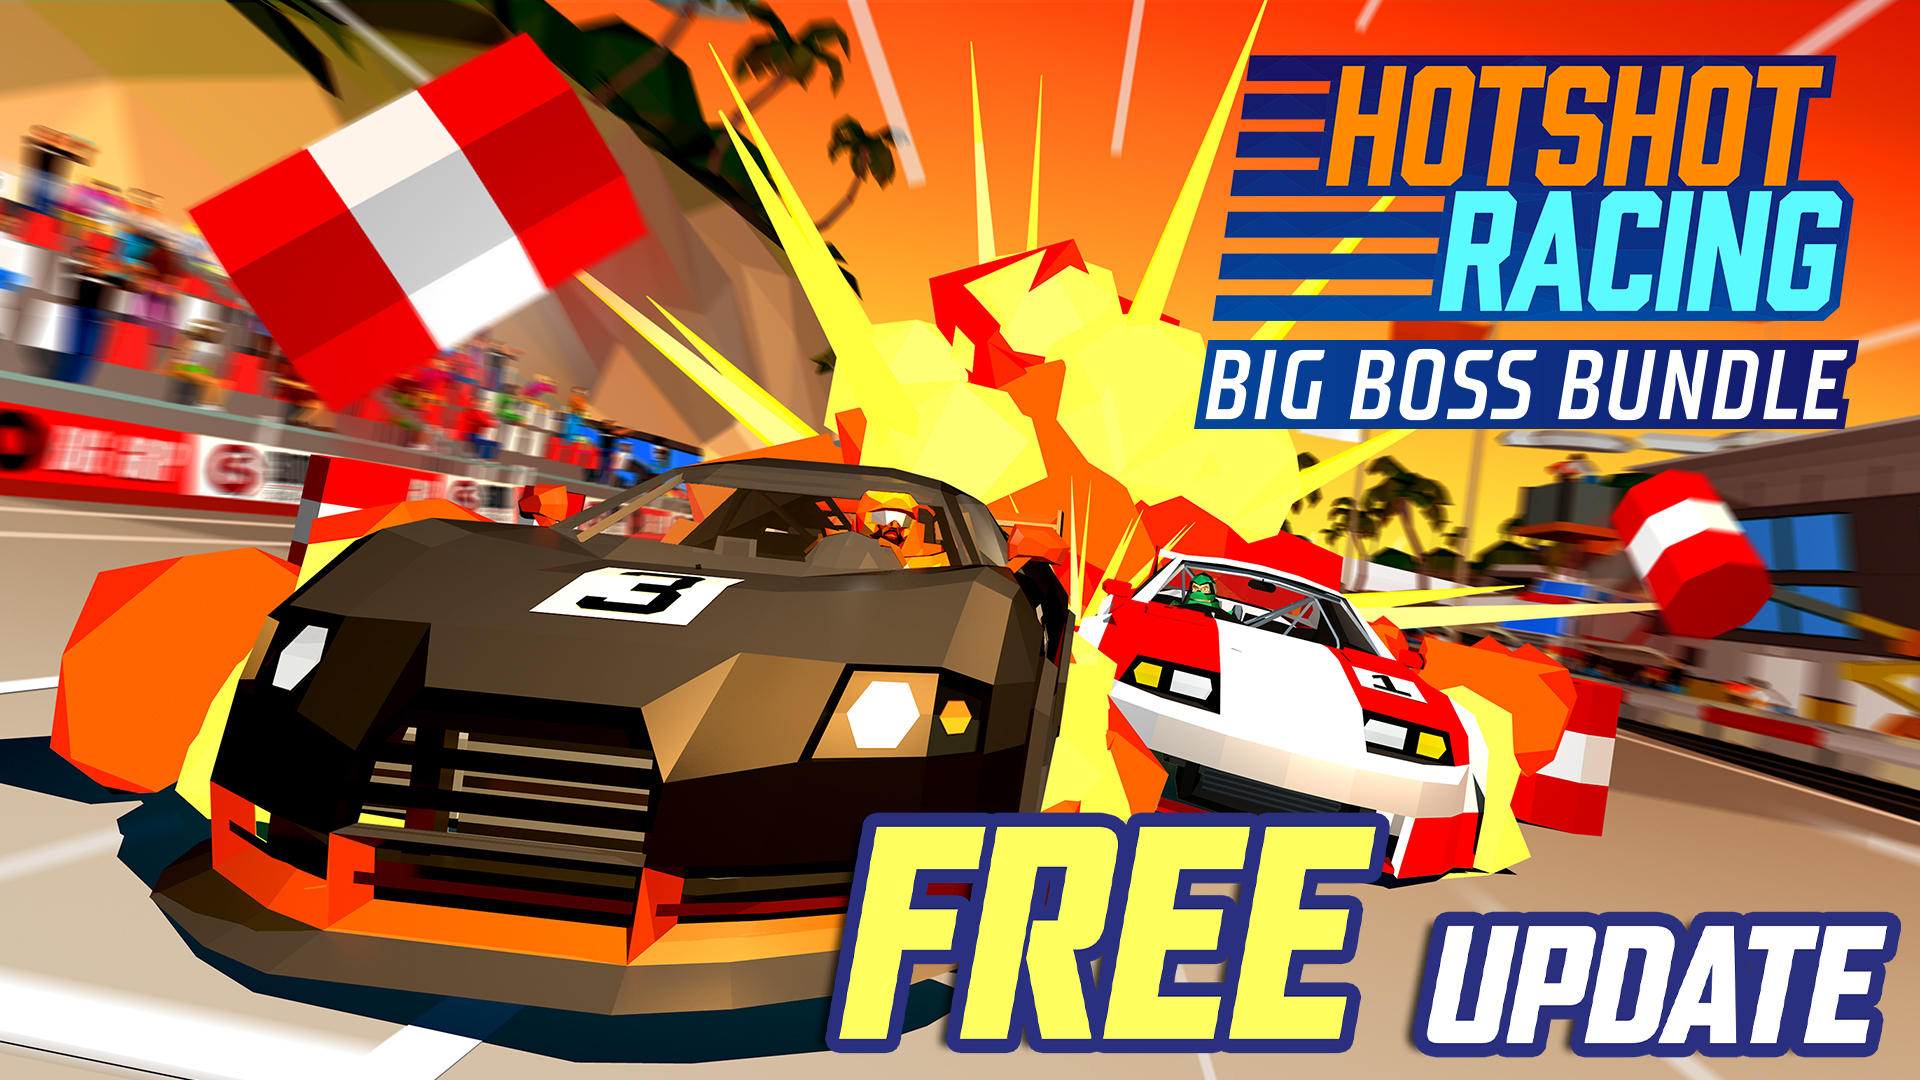 hotshot racing nintendo switch download free